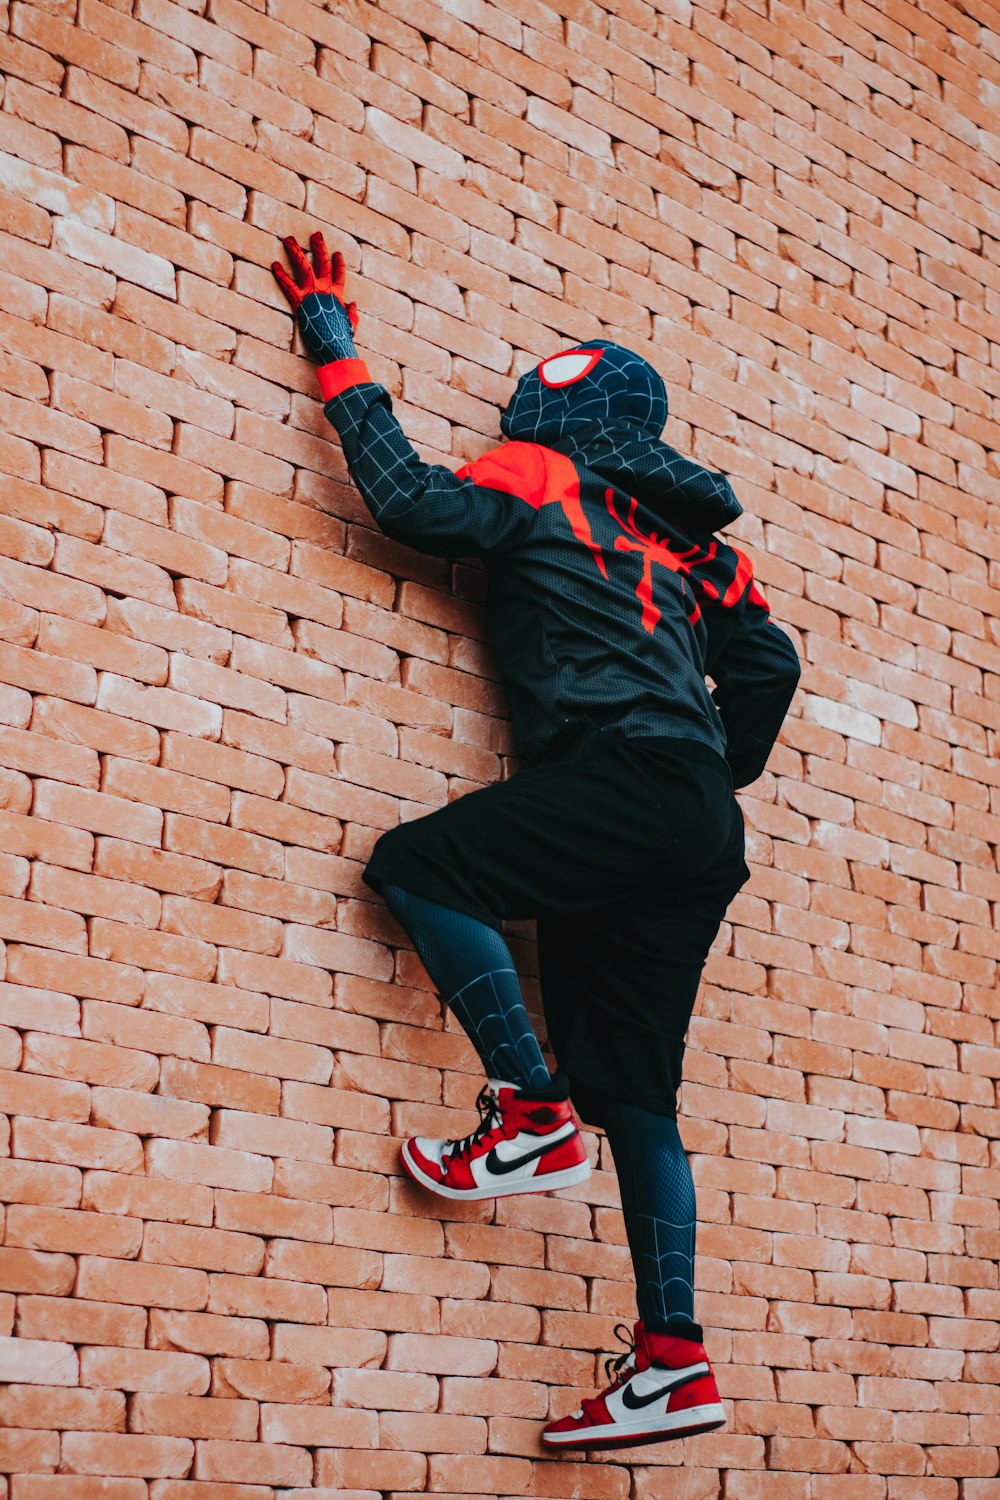 a person climbing up a brick wall